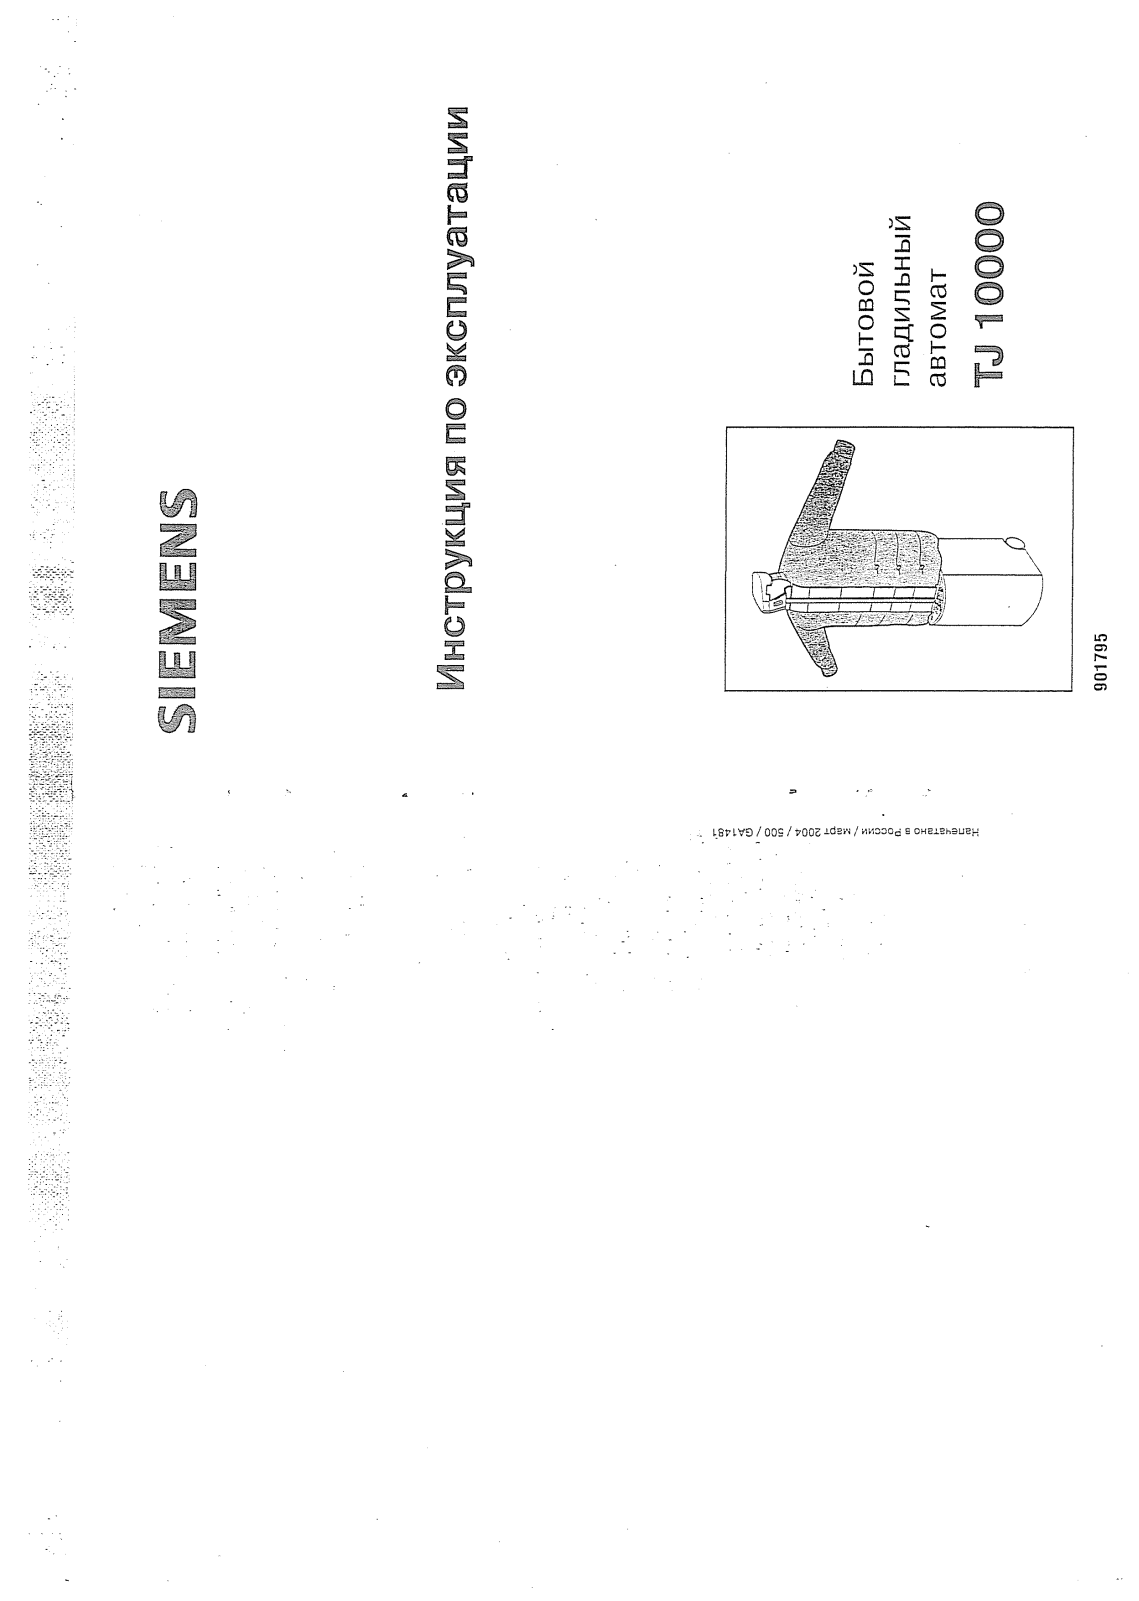 Siemens TJ 10001 User Manual